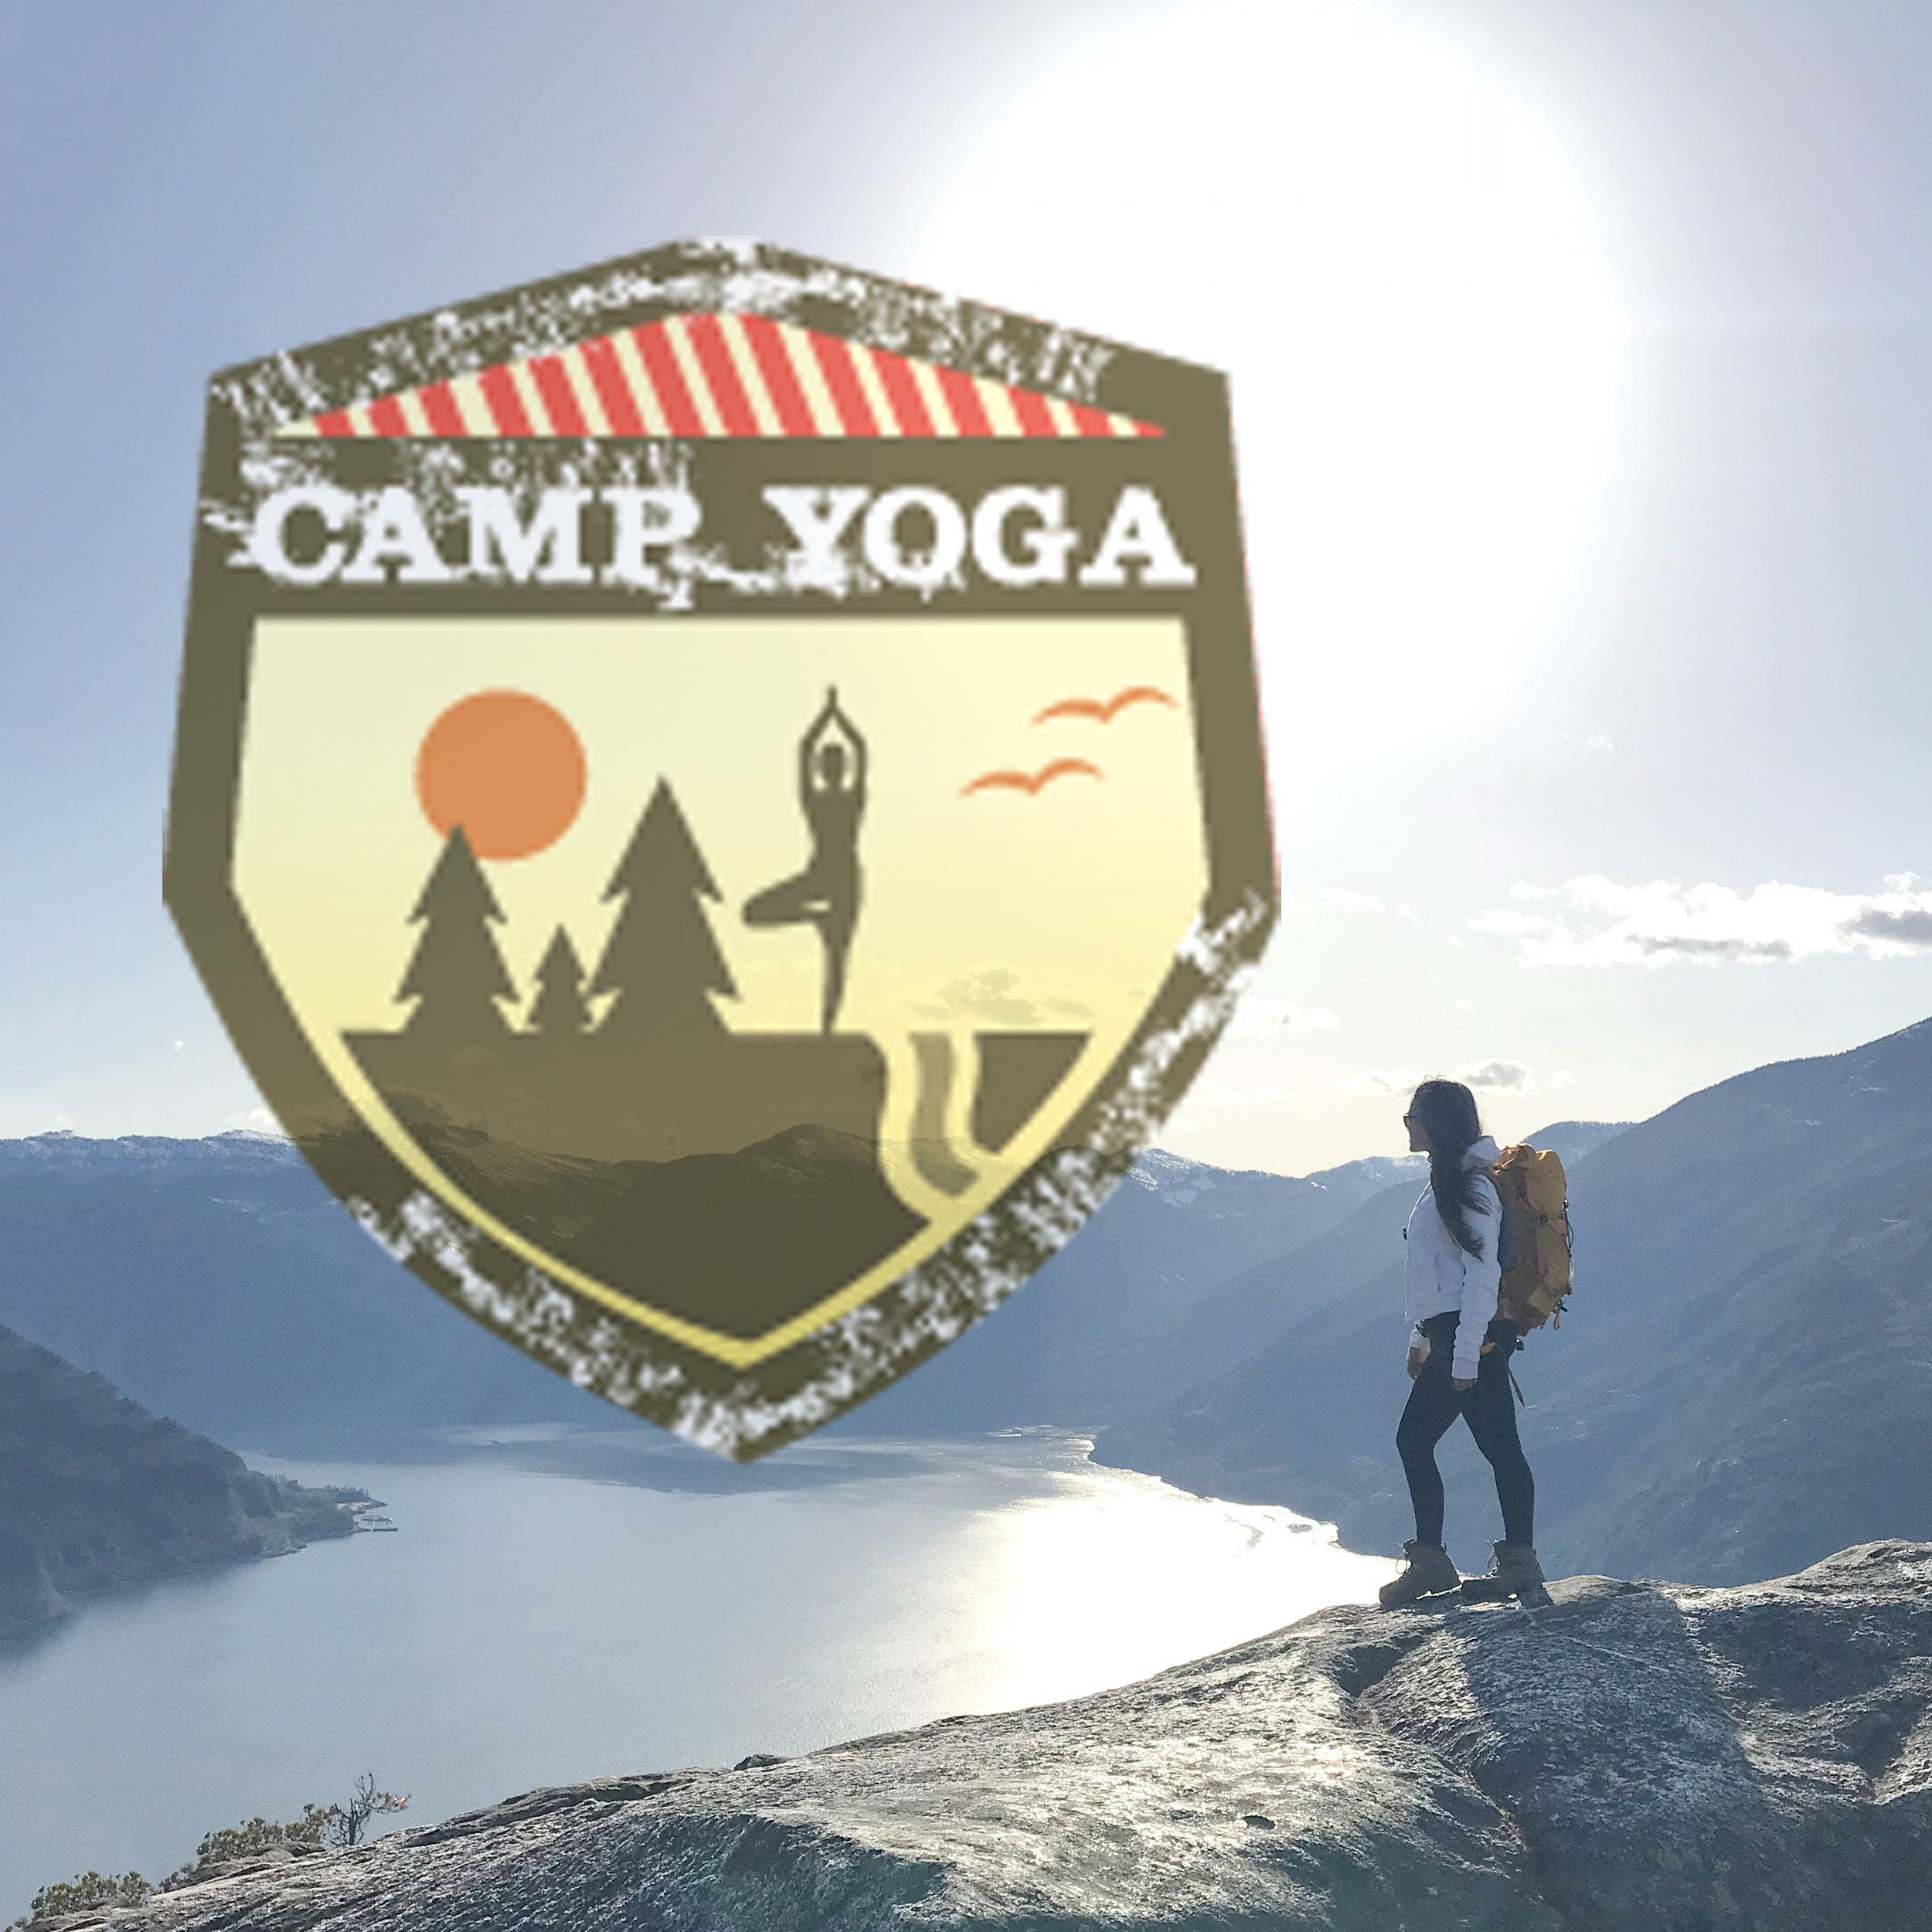 Camp Yoga - British Columbia - Cam Lee Yoga 